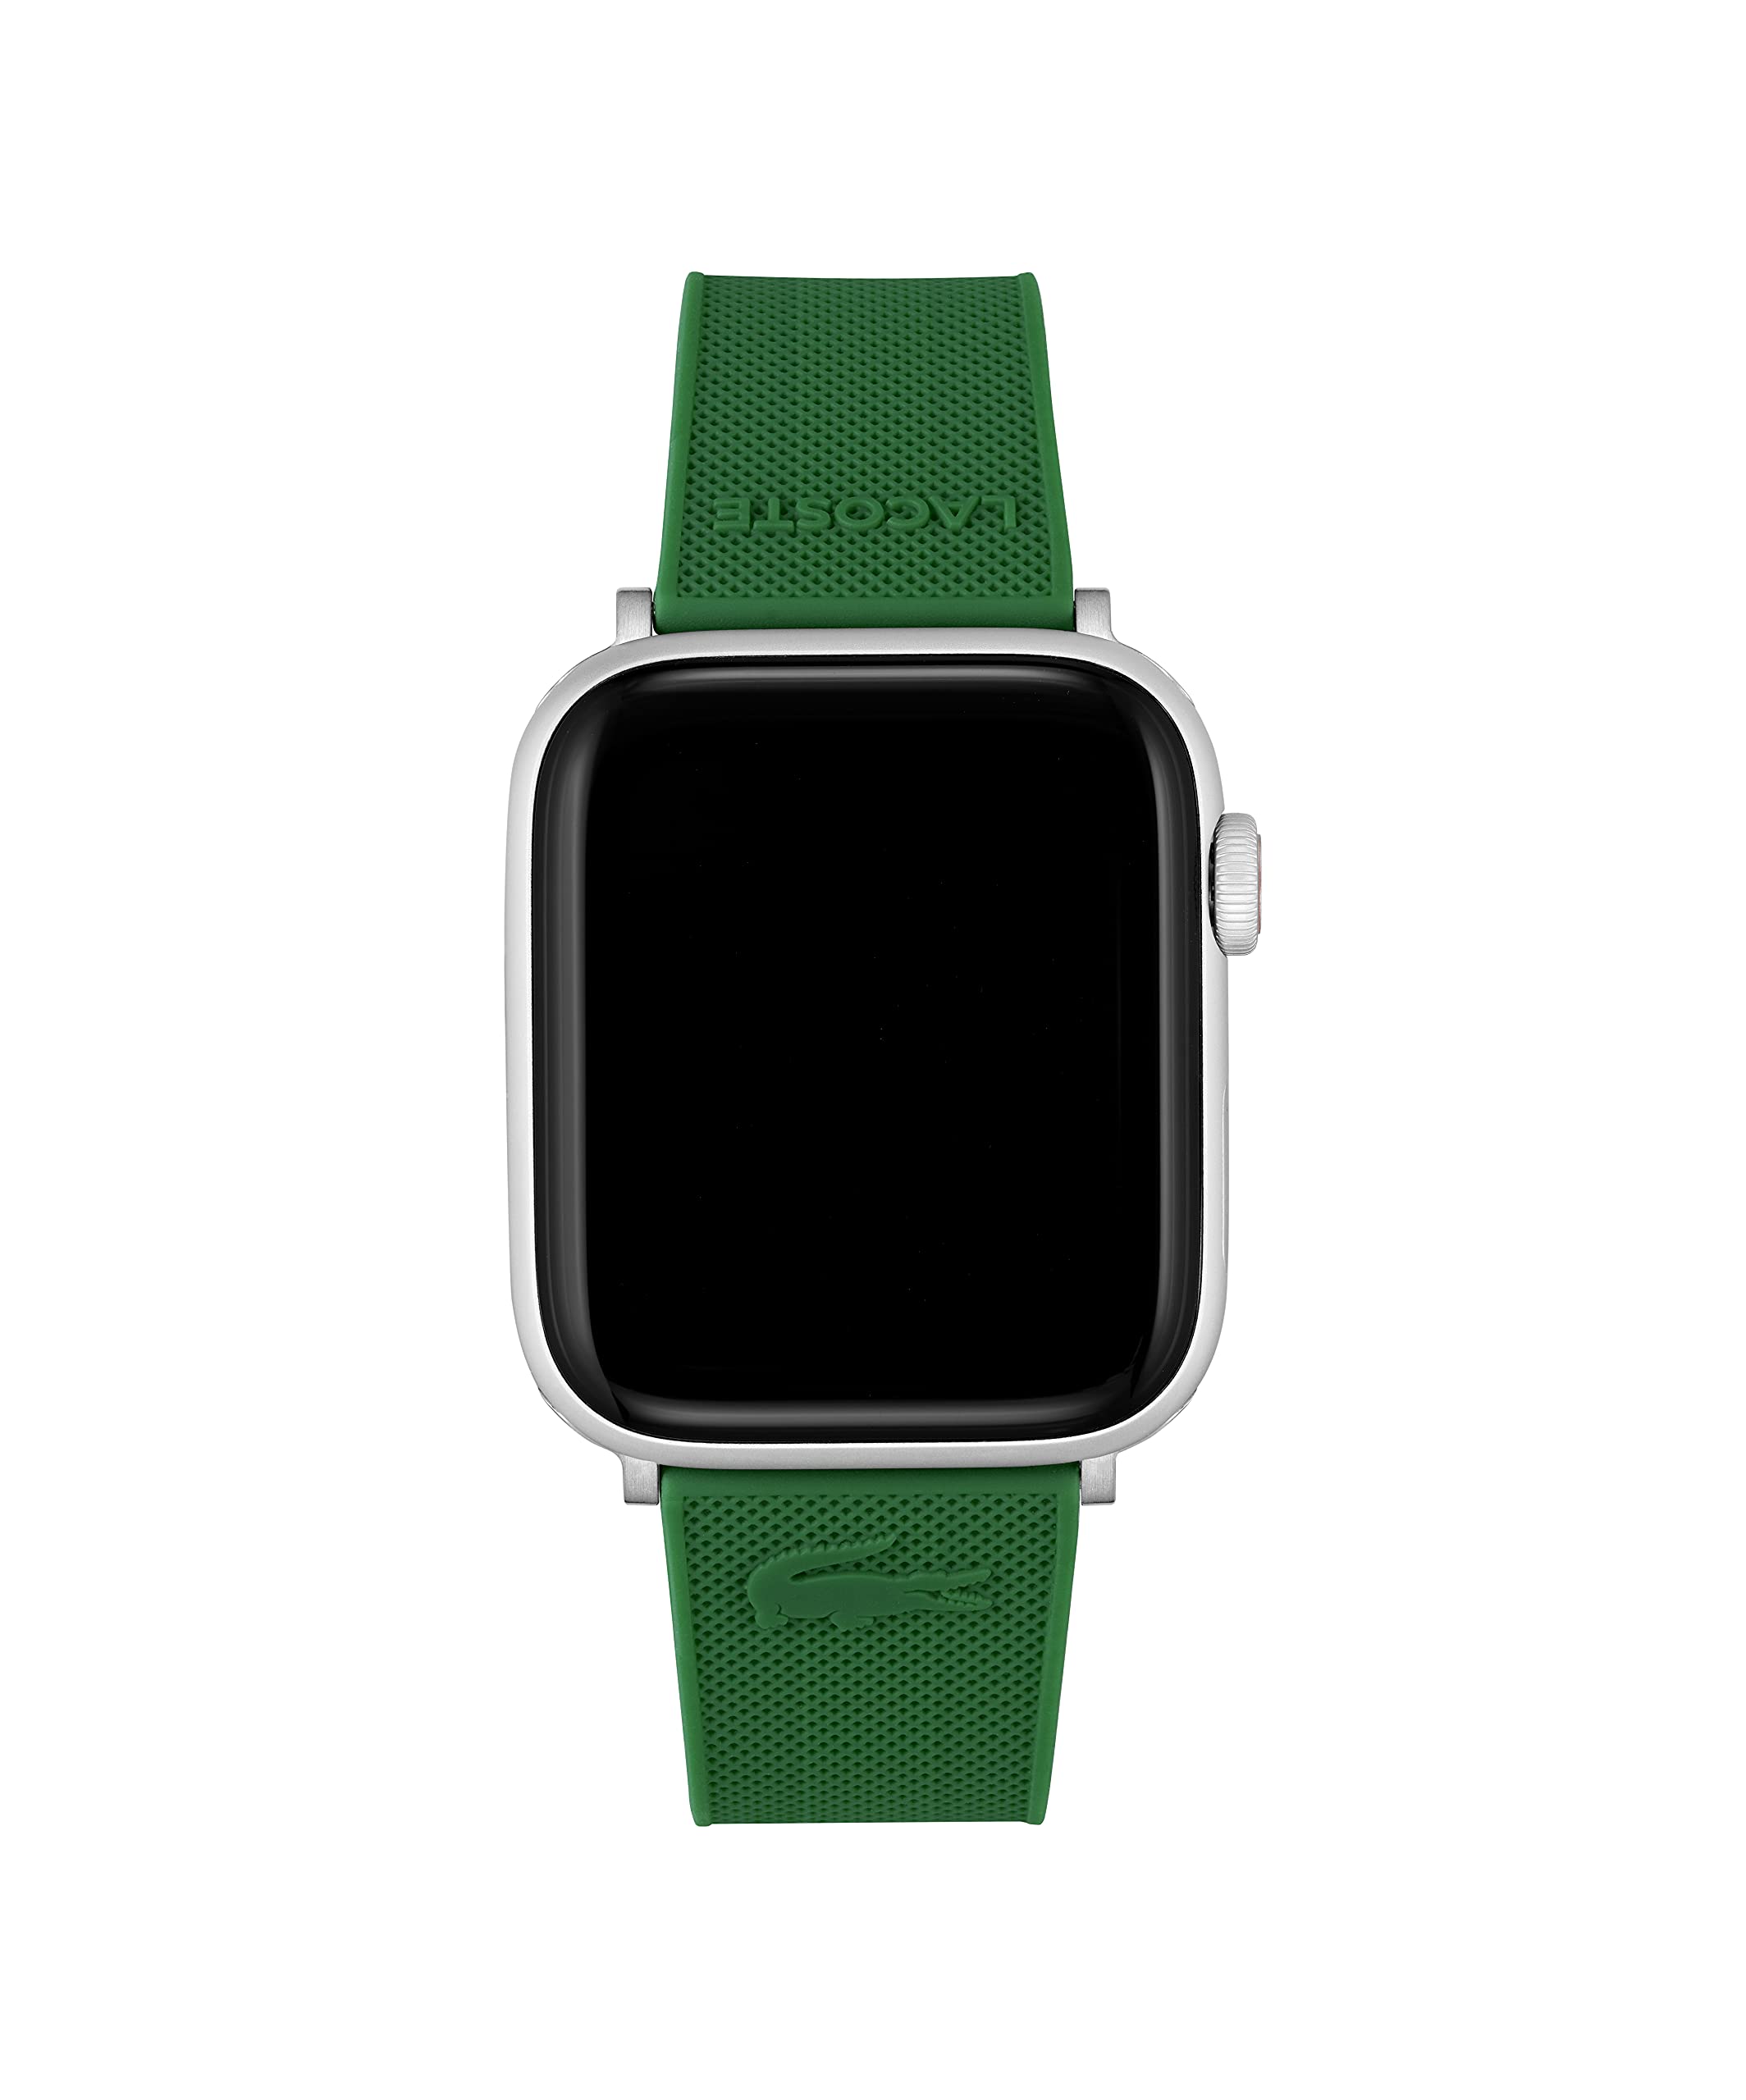 Lacoste Apple Watch Straps